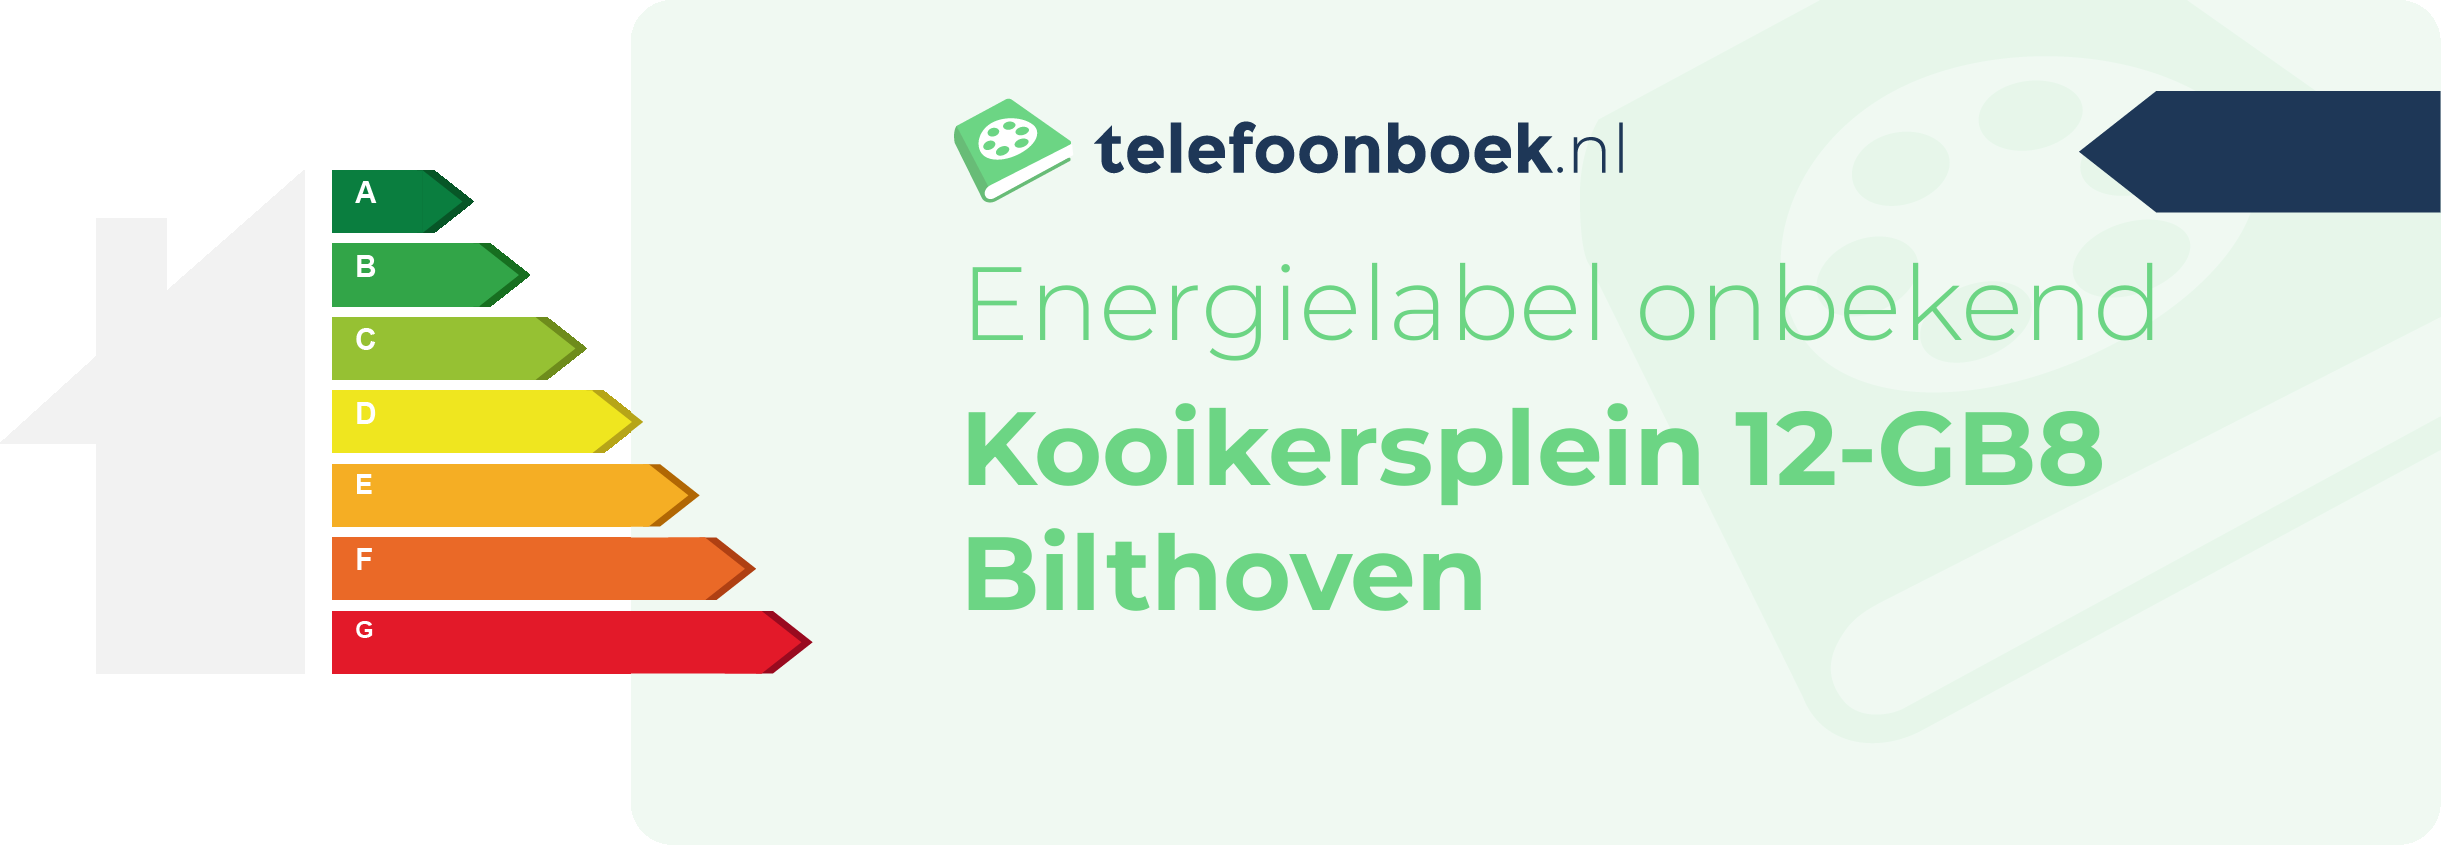 Energielabel Kooikersplein 12-GB8 Bilthoven